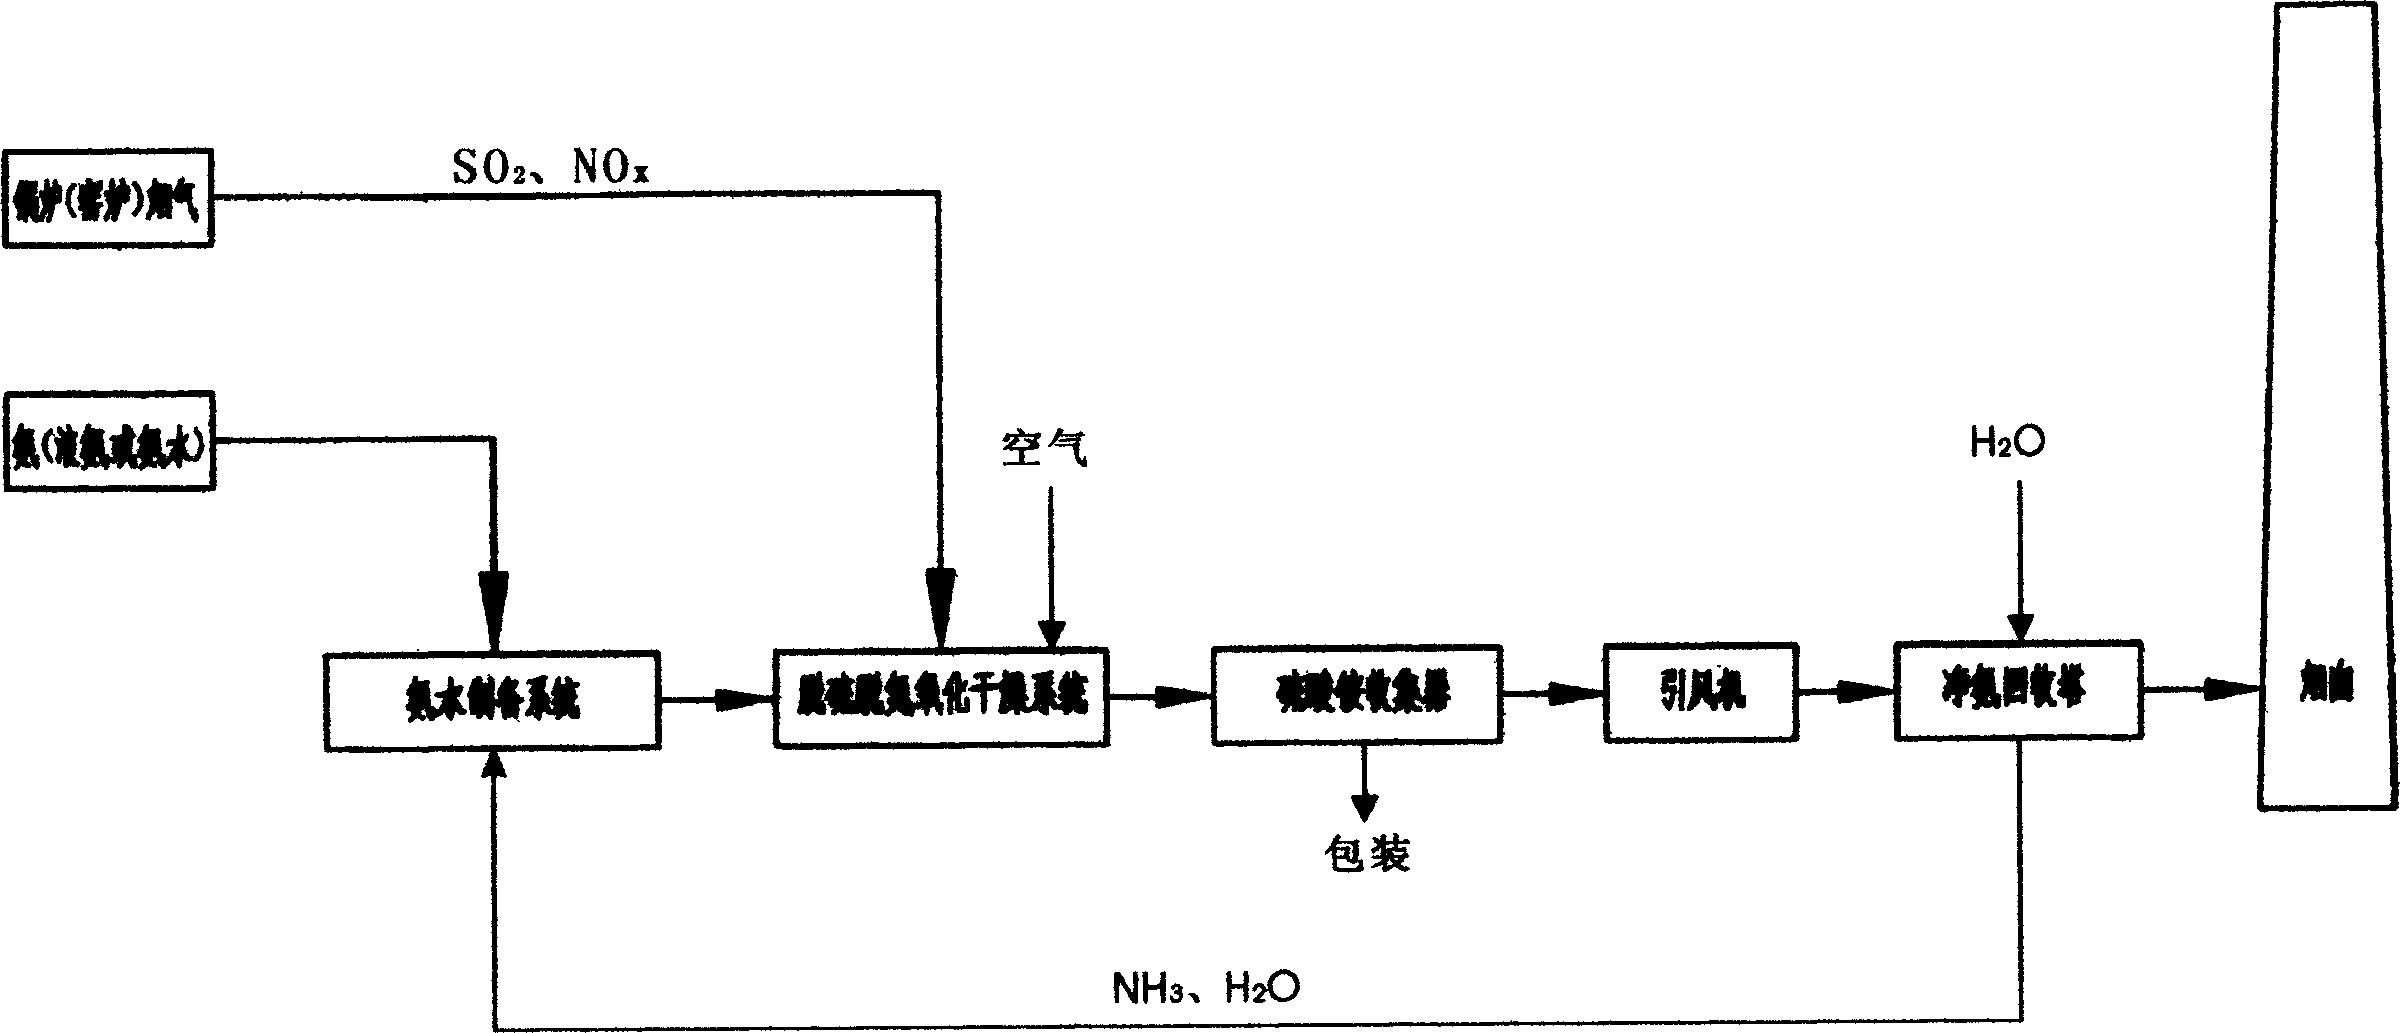 Ammonia-ammonia sulfate dry type flue gas desulfurizing denitrifying equipment and technique